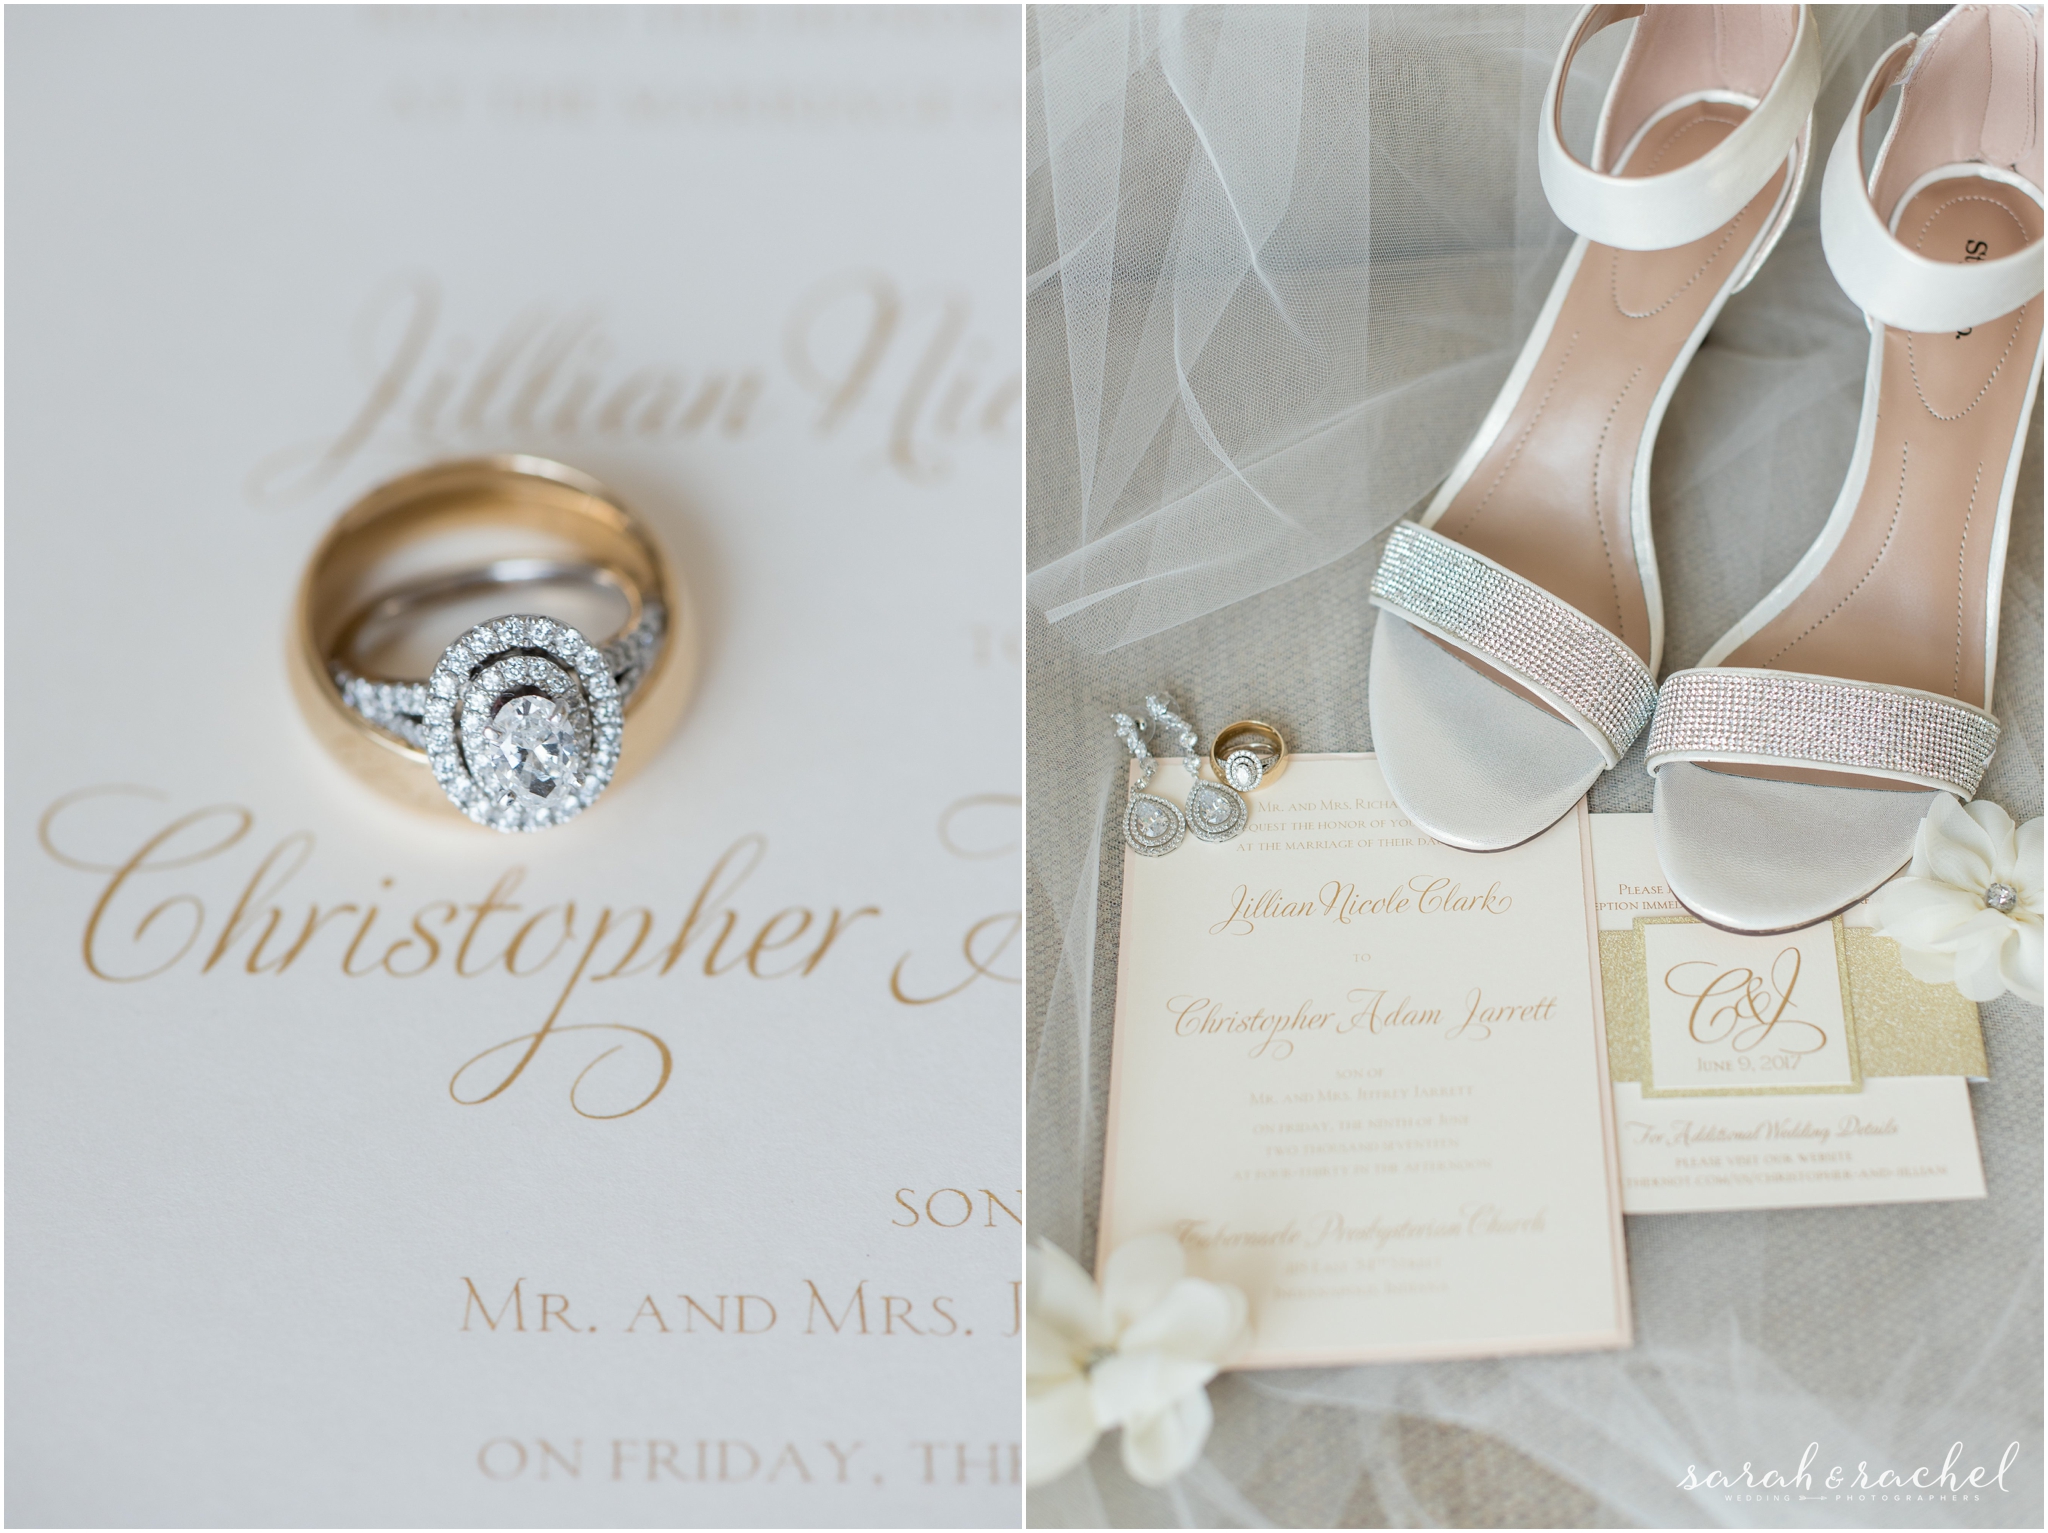 Chris & Jillian | Indianapolis wedding | Omni Severin Hotel | Gold wedding accents